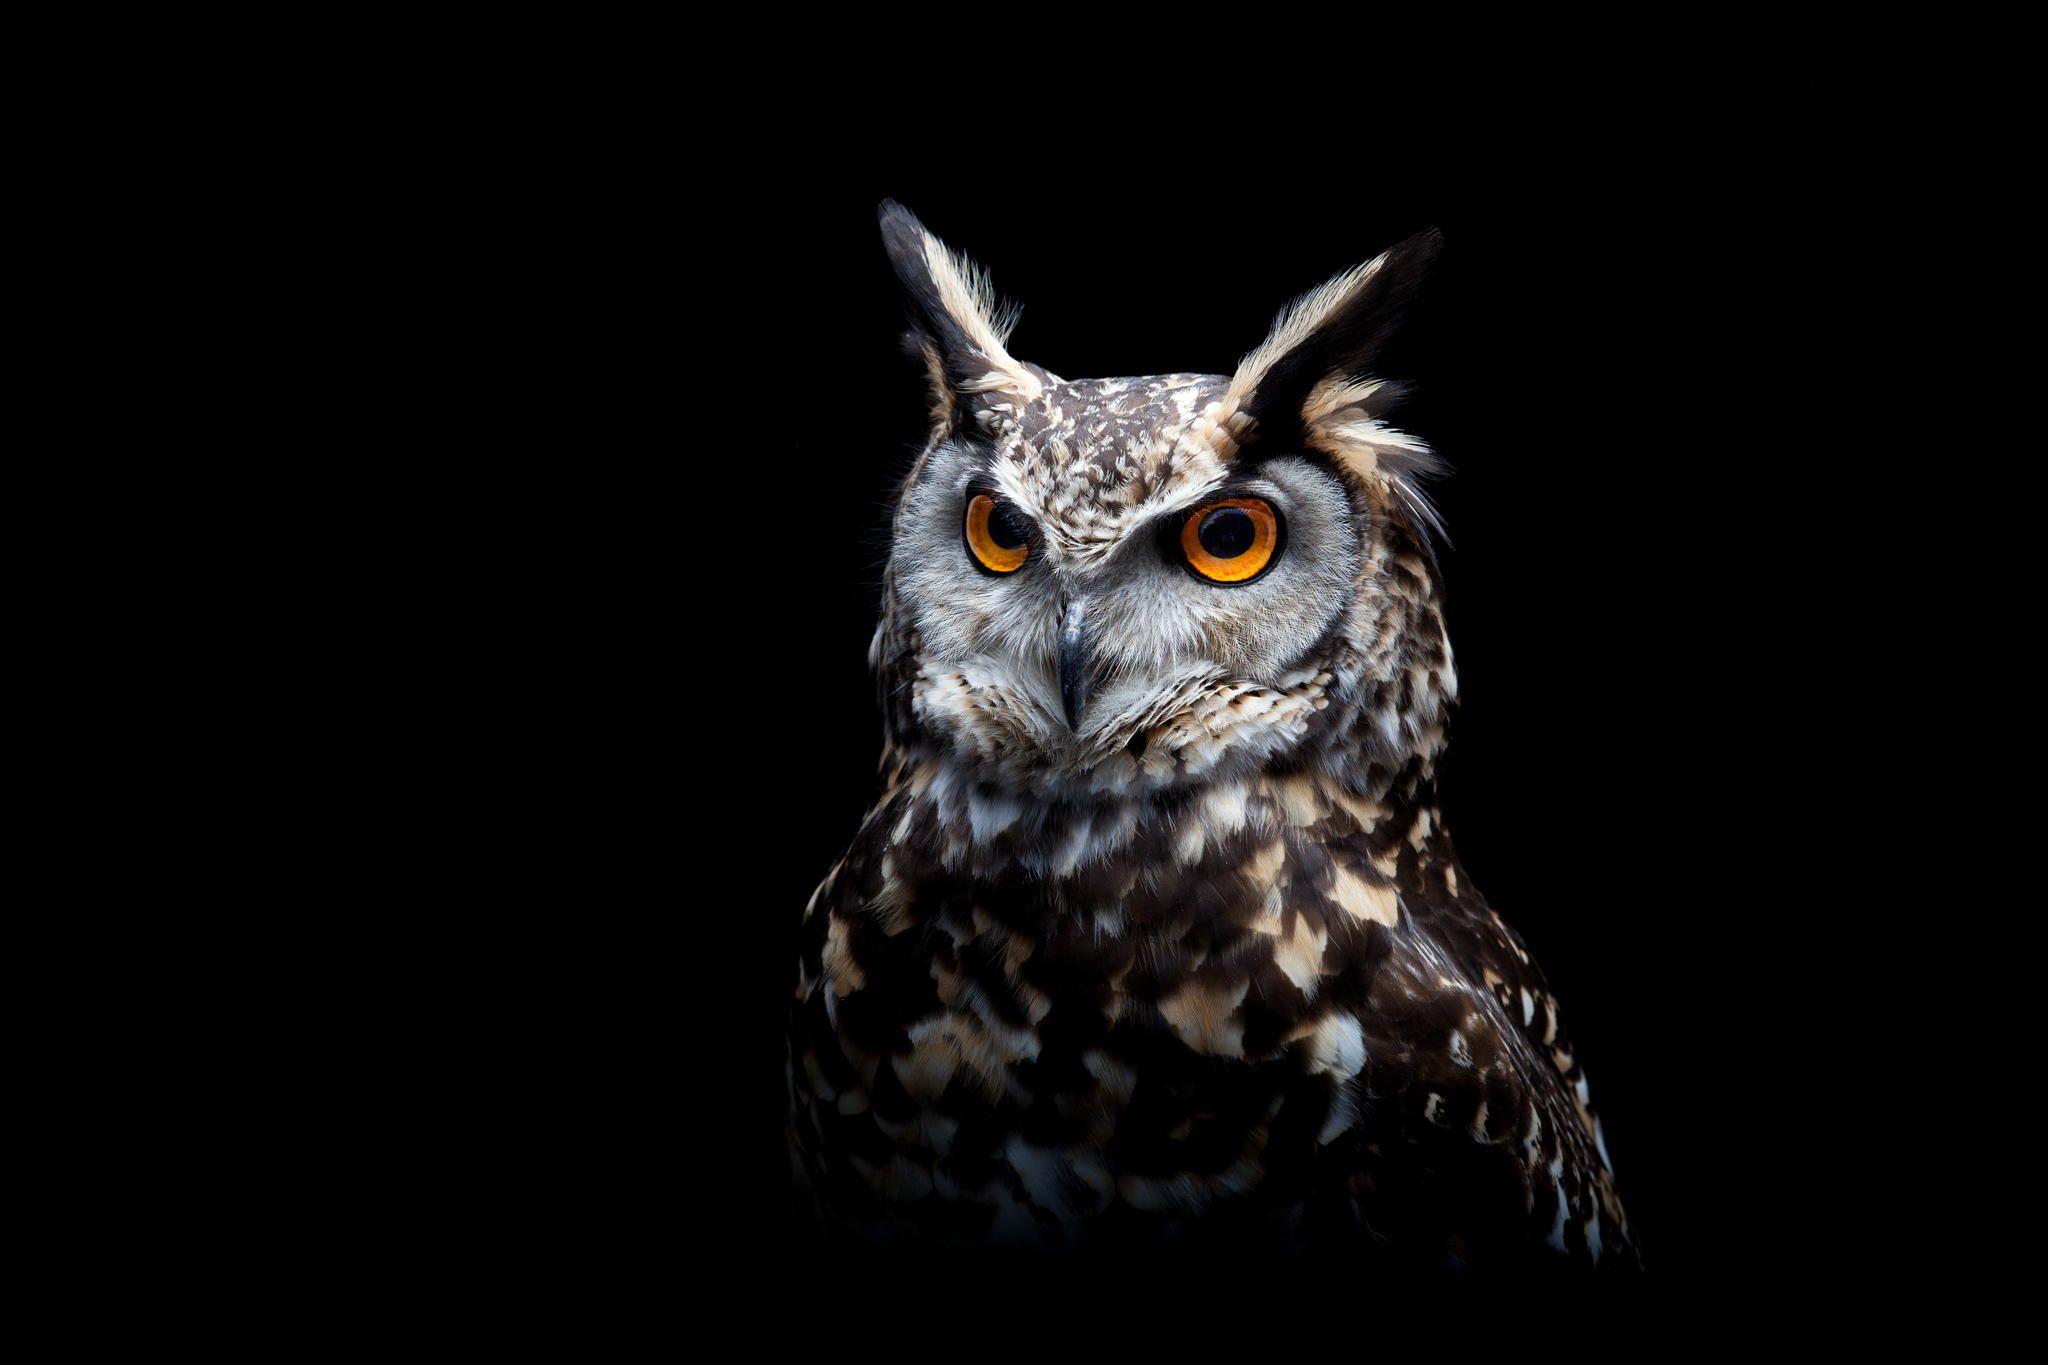 Dark Owl Wallpapers Top Free Dark Owl Backgrounds Wallpaperaccess ...